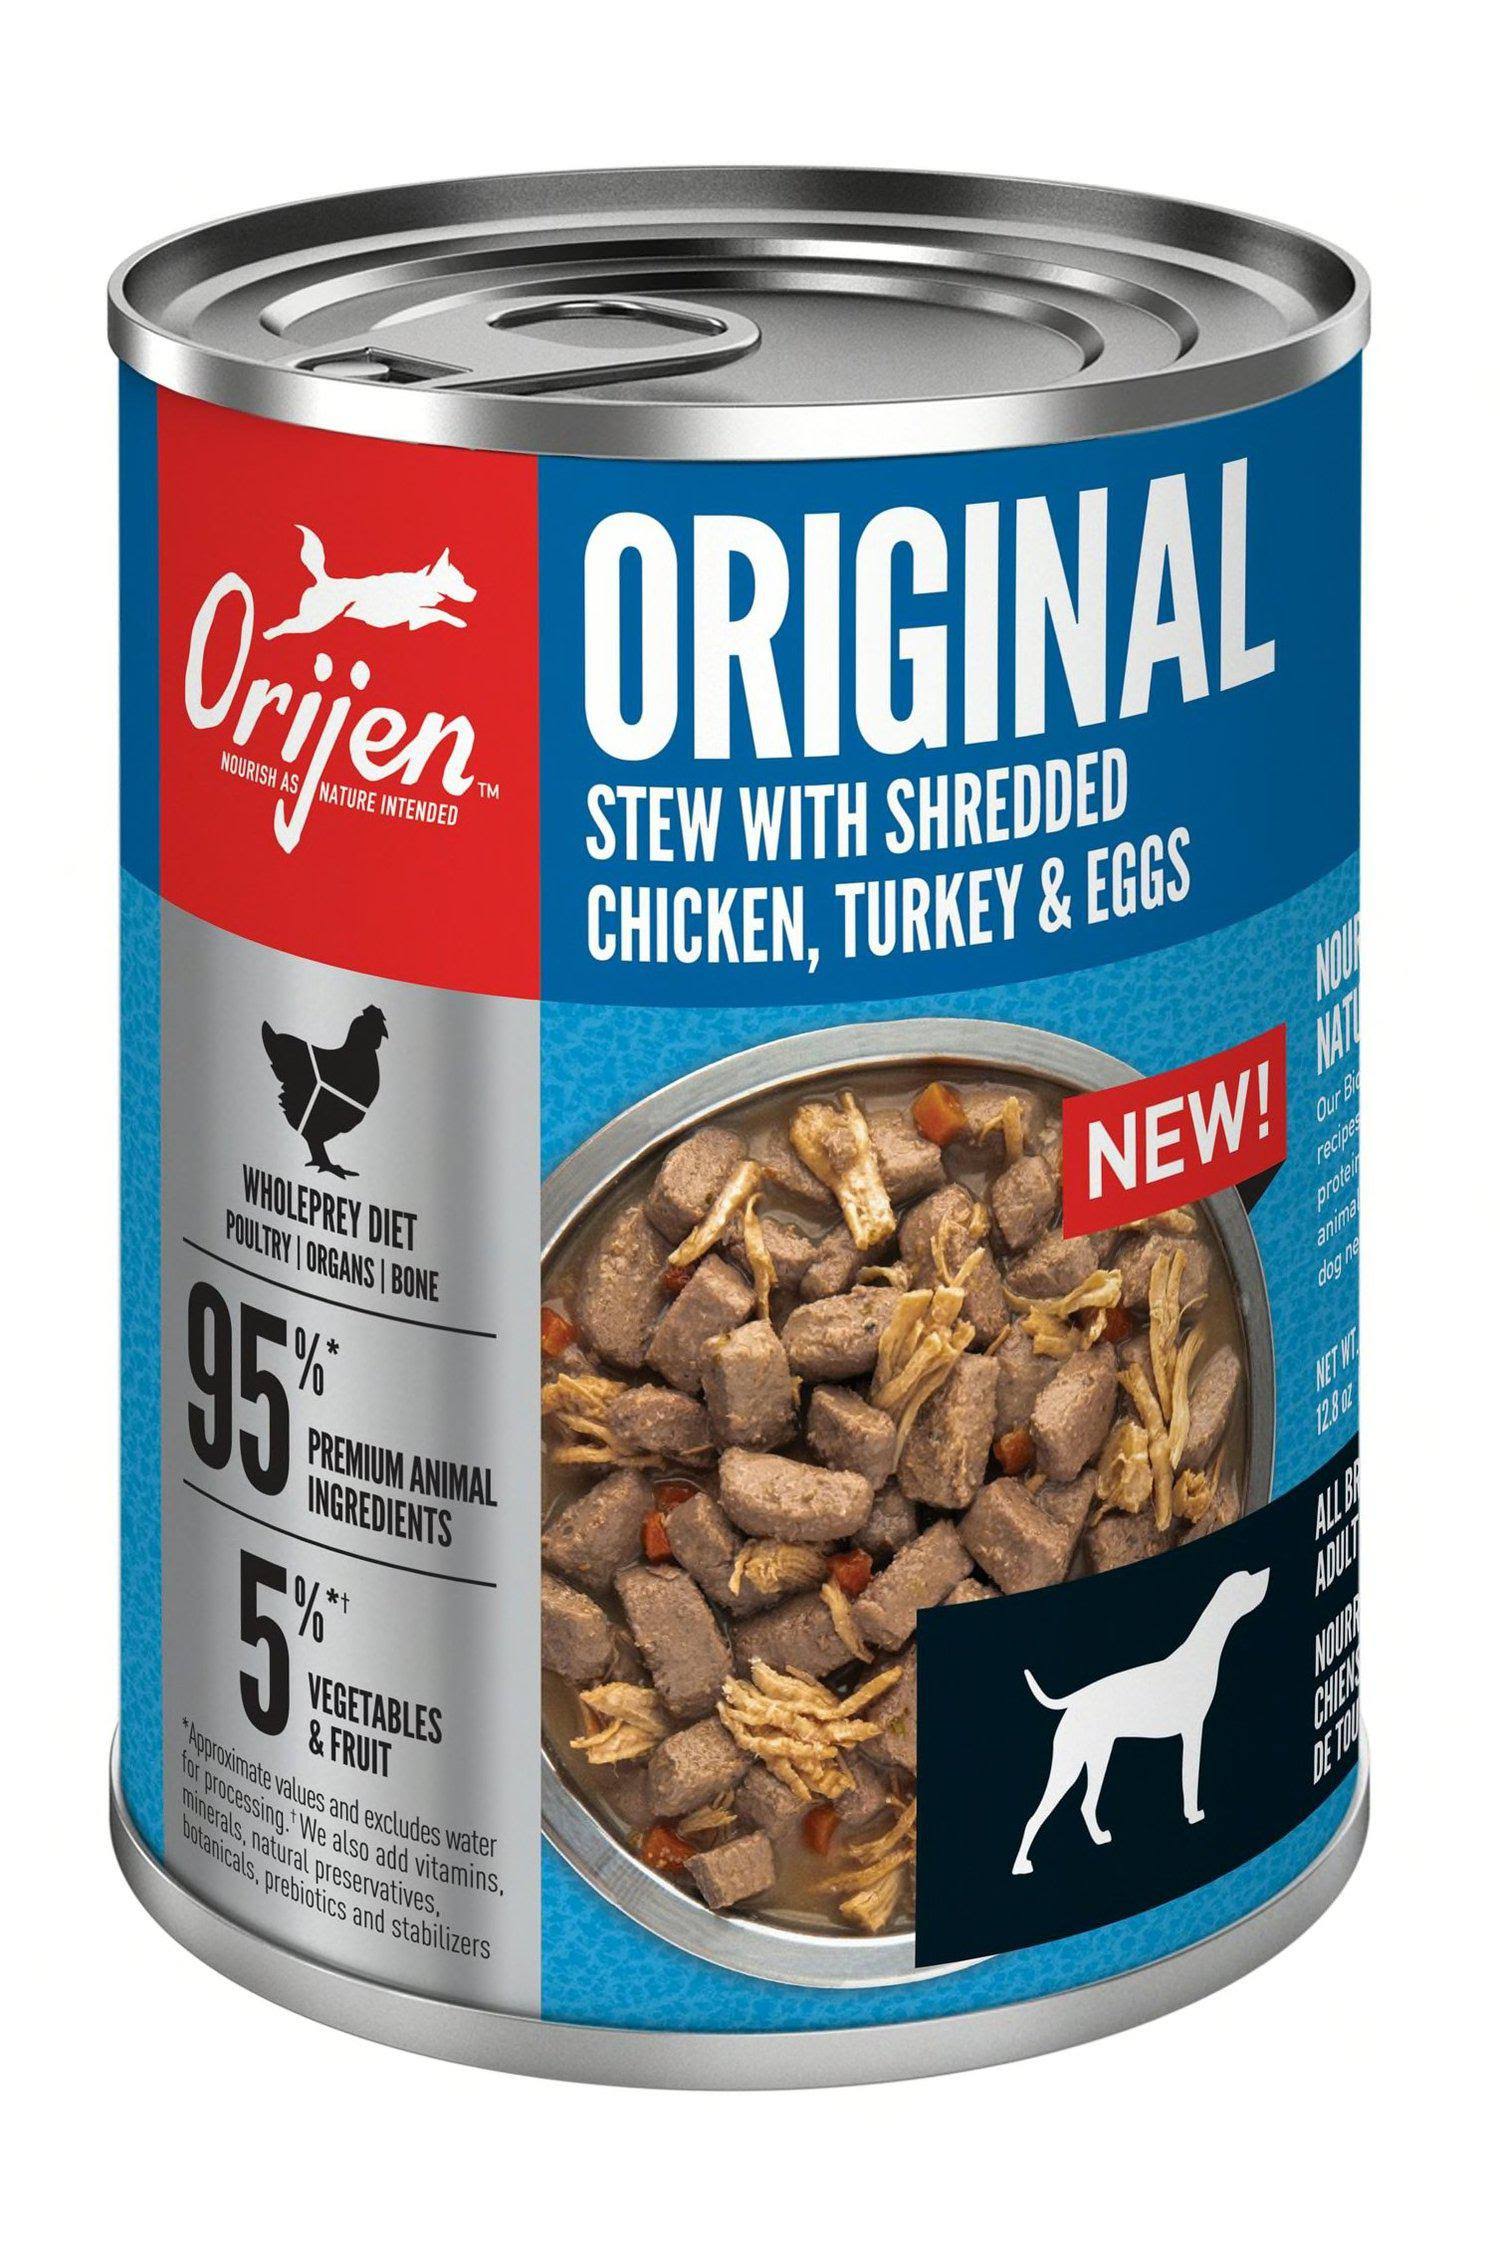 Orijen Original Stew with Chicken, Turkey & Eggs Dog Food, 12.8-oz